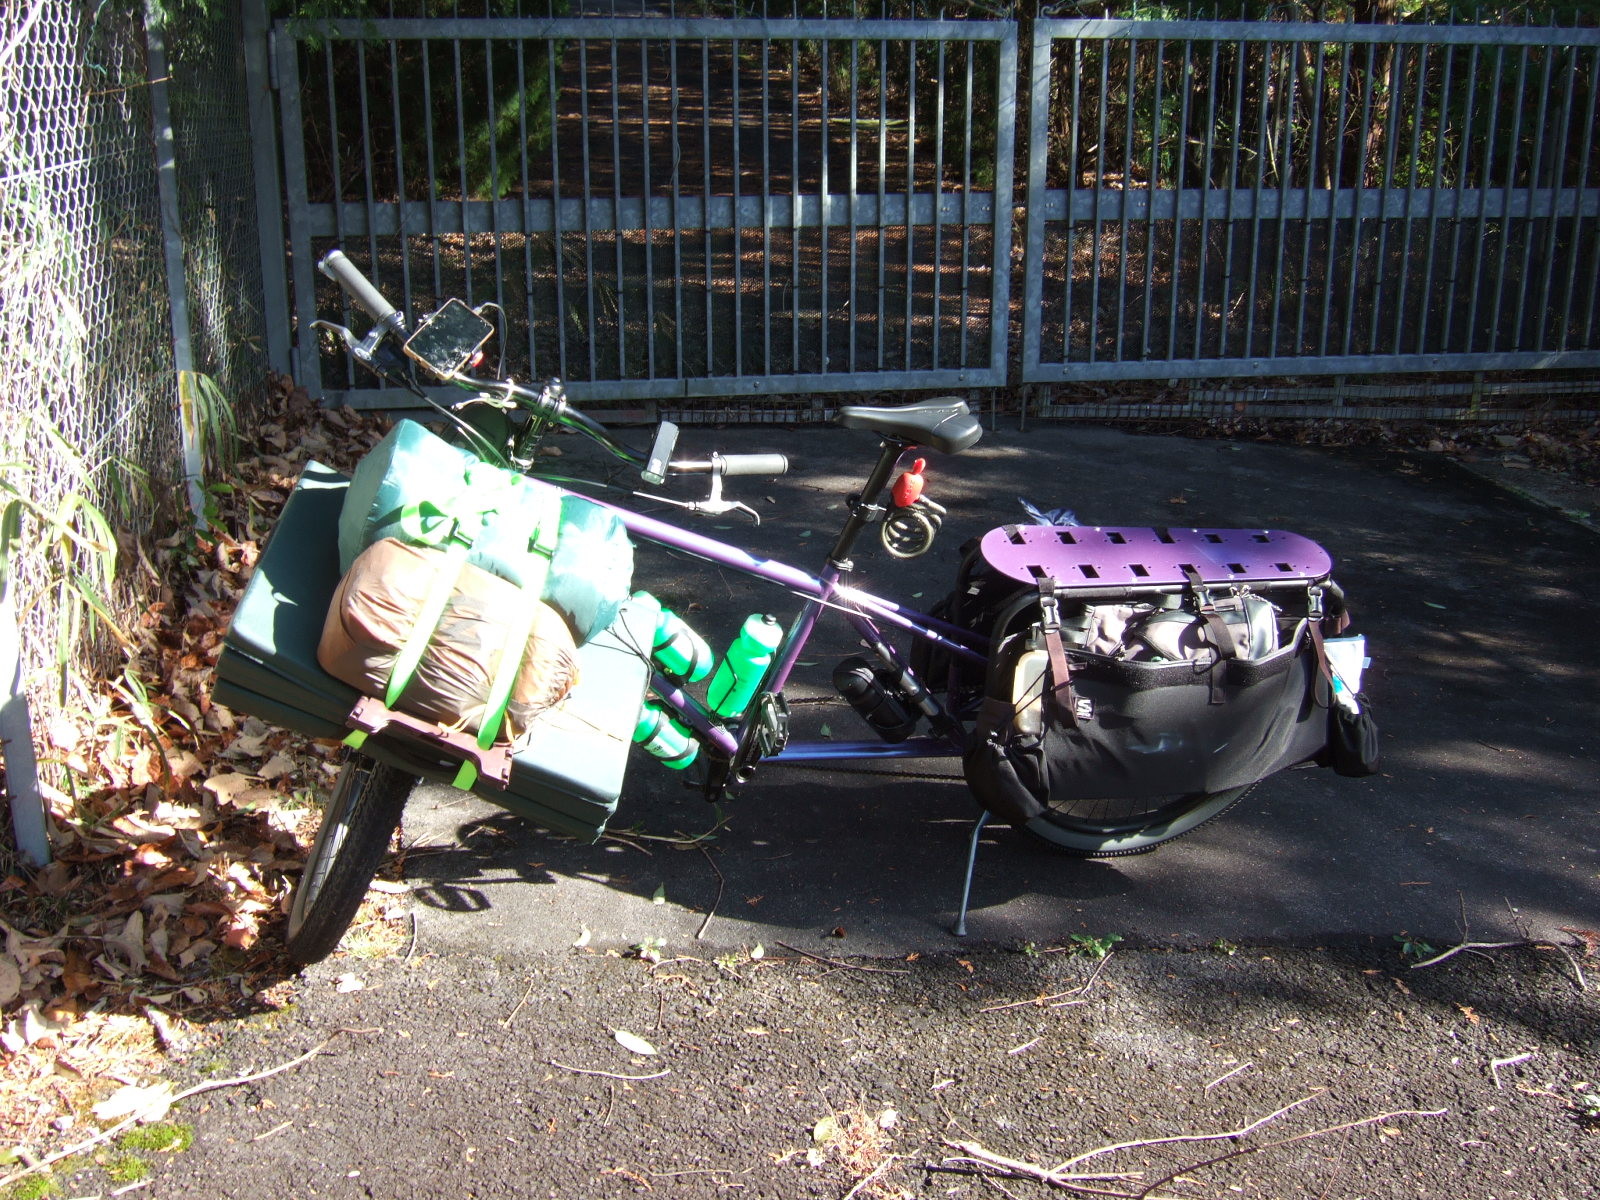 A loaded cargo bike parked in front of a locked steel gate.